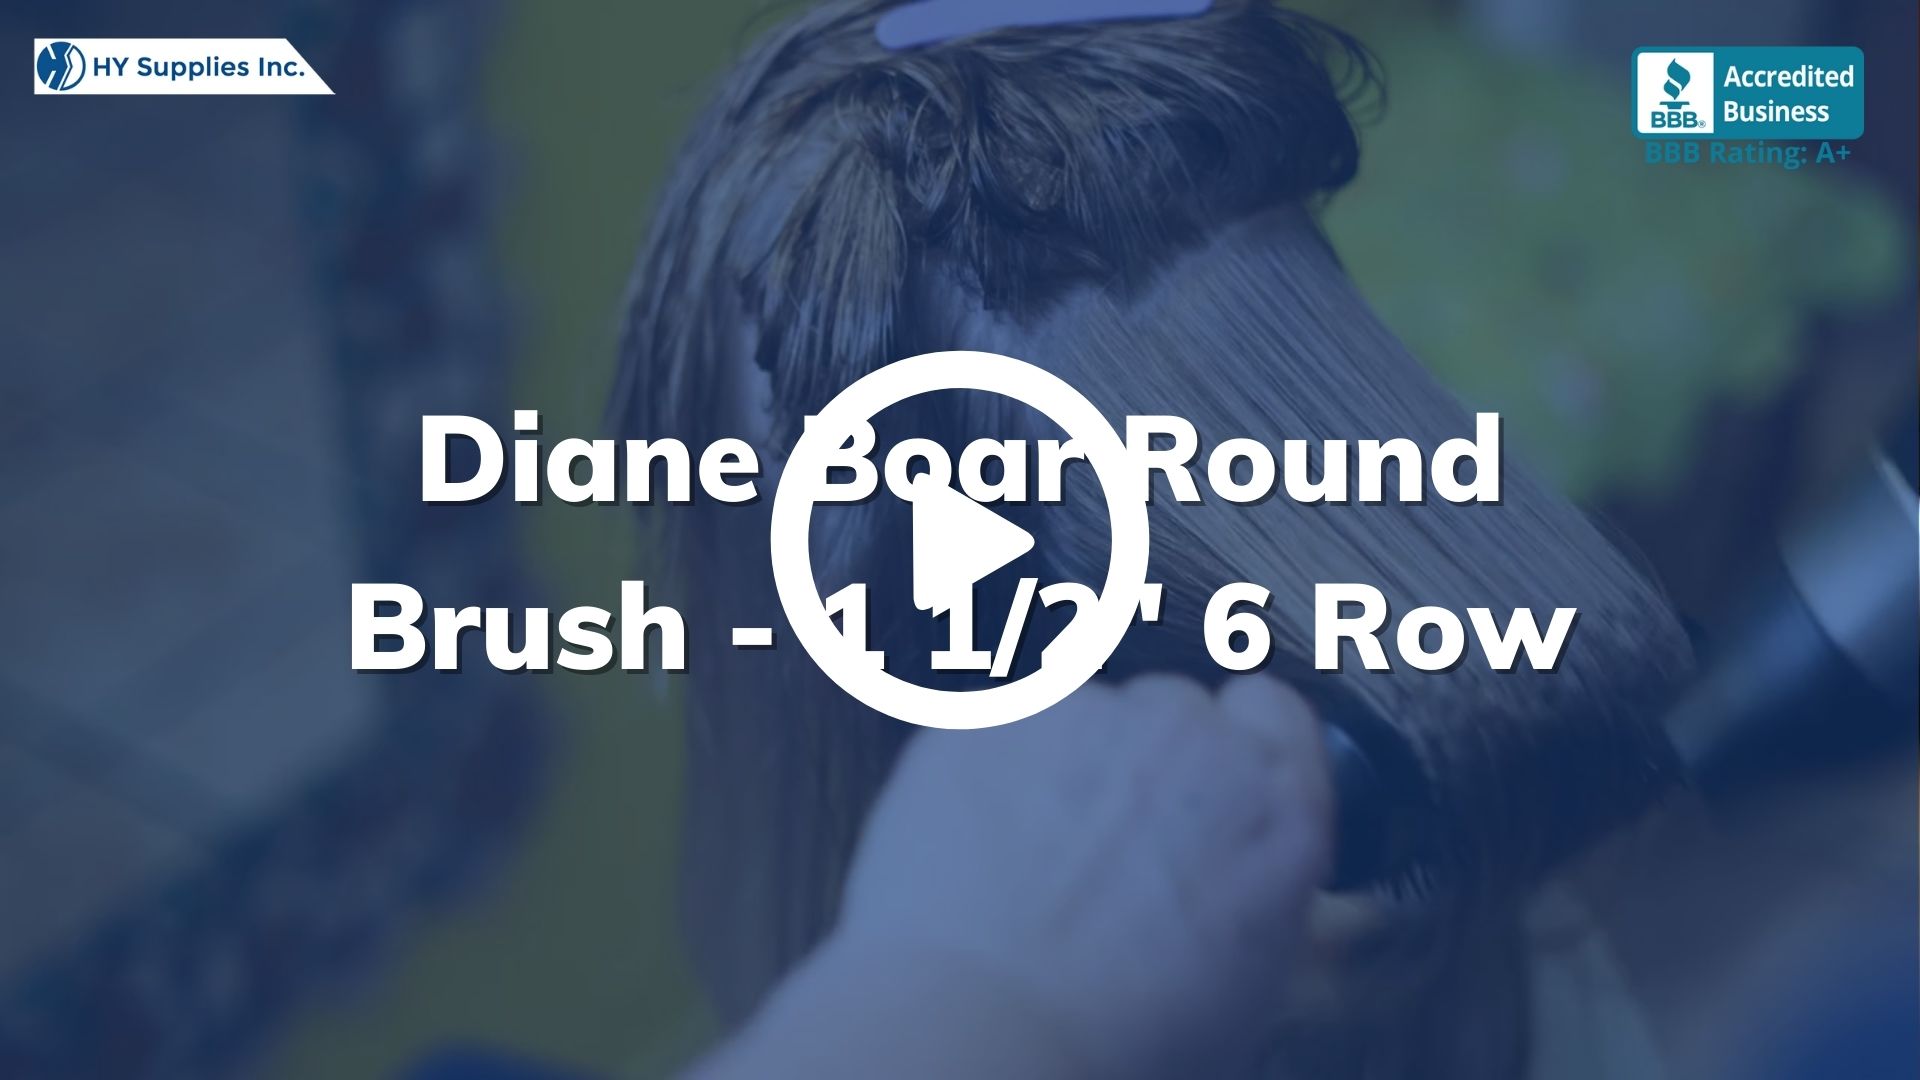 Diane Boar Round Brush - 1 1/2"" 6 Row